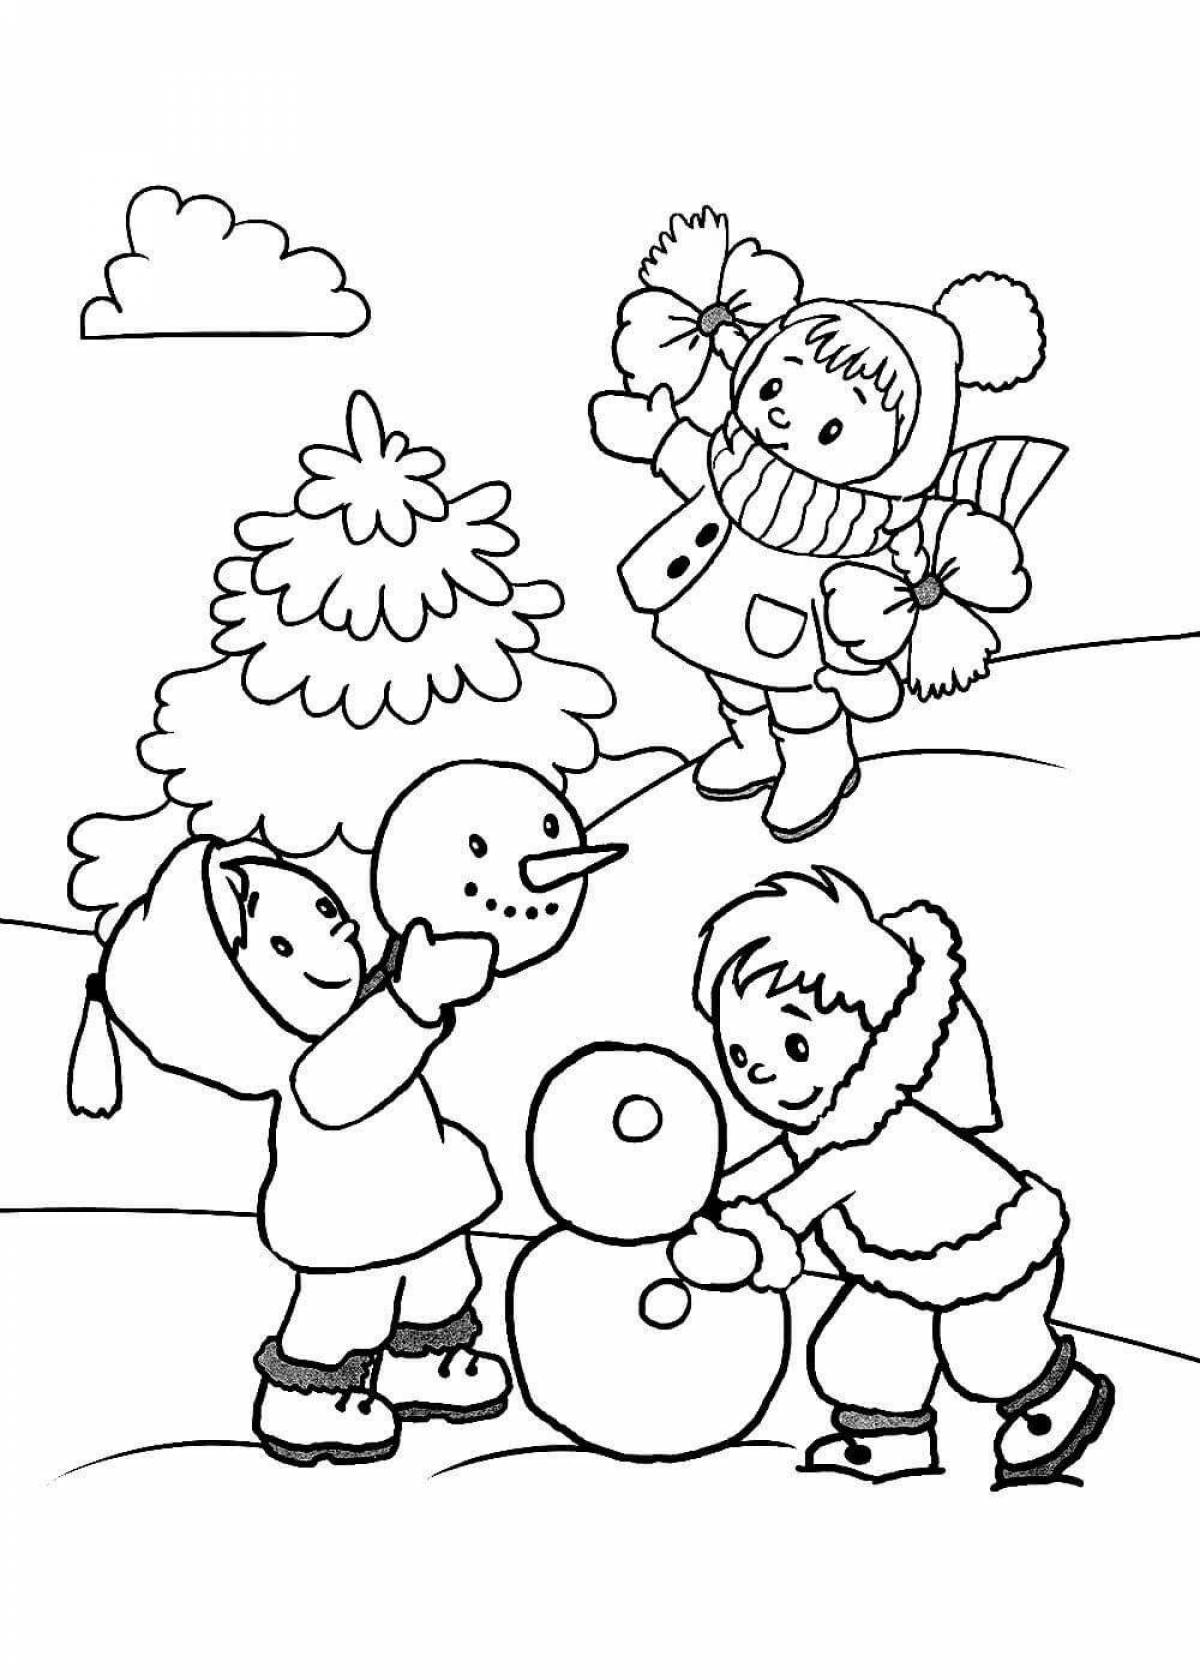 Jovial coloring page drawing winter fun preparatory group